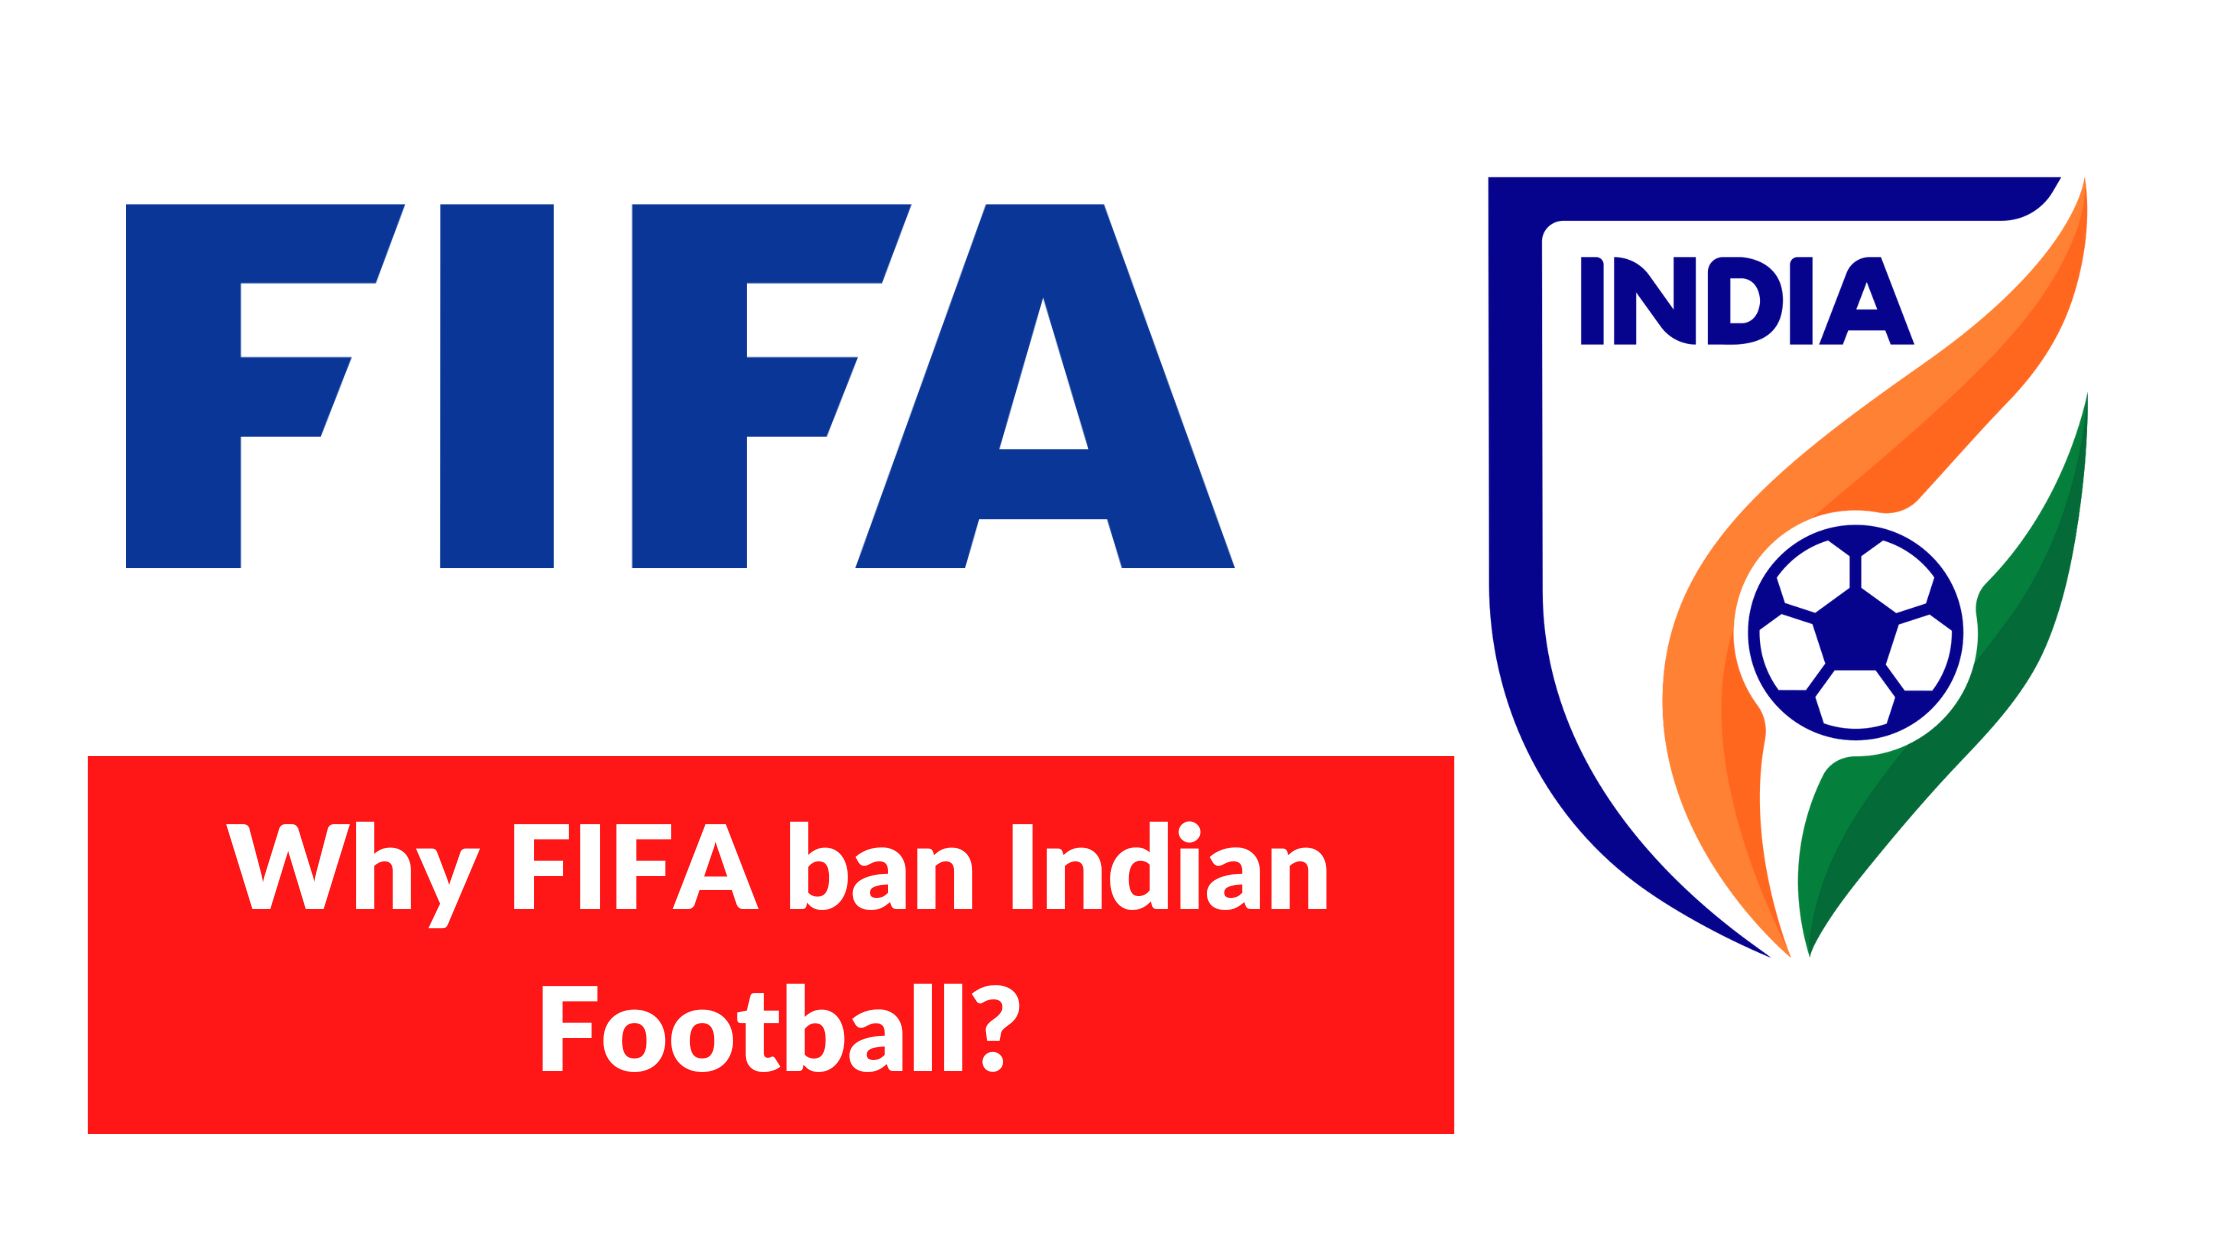 FIFA ban Indian Football